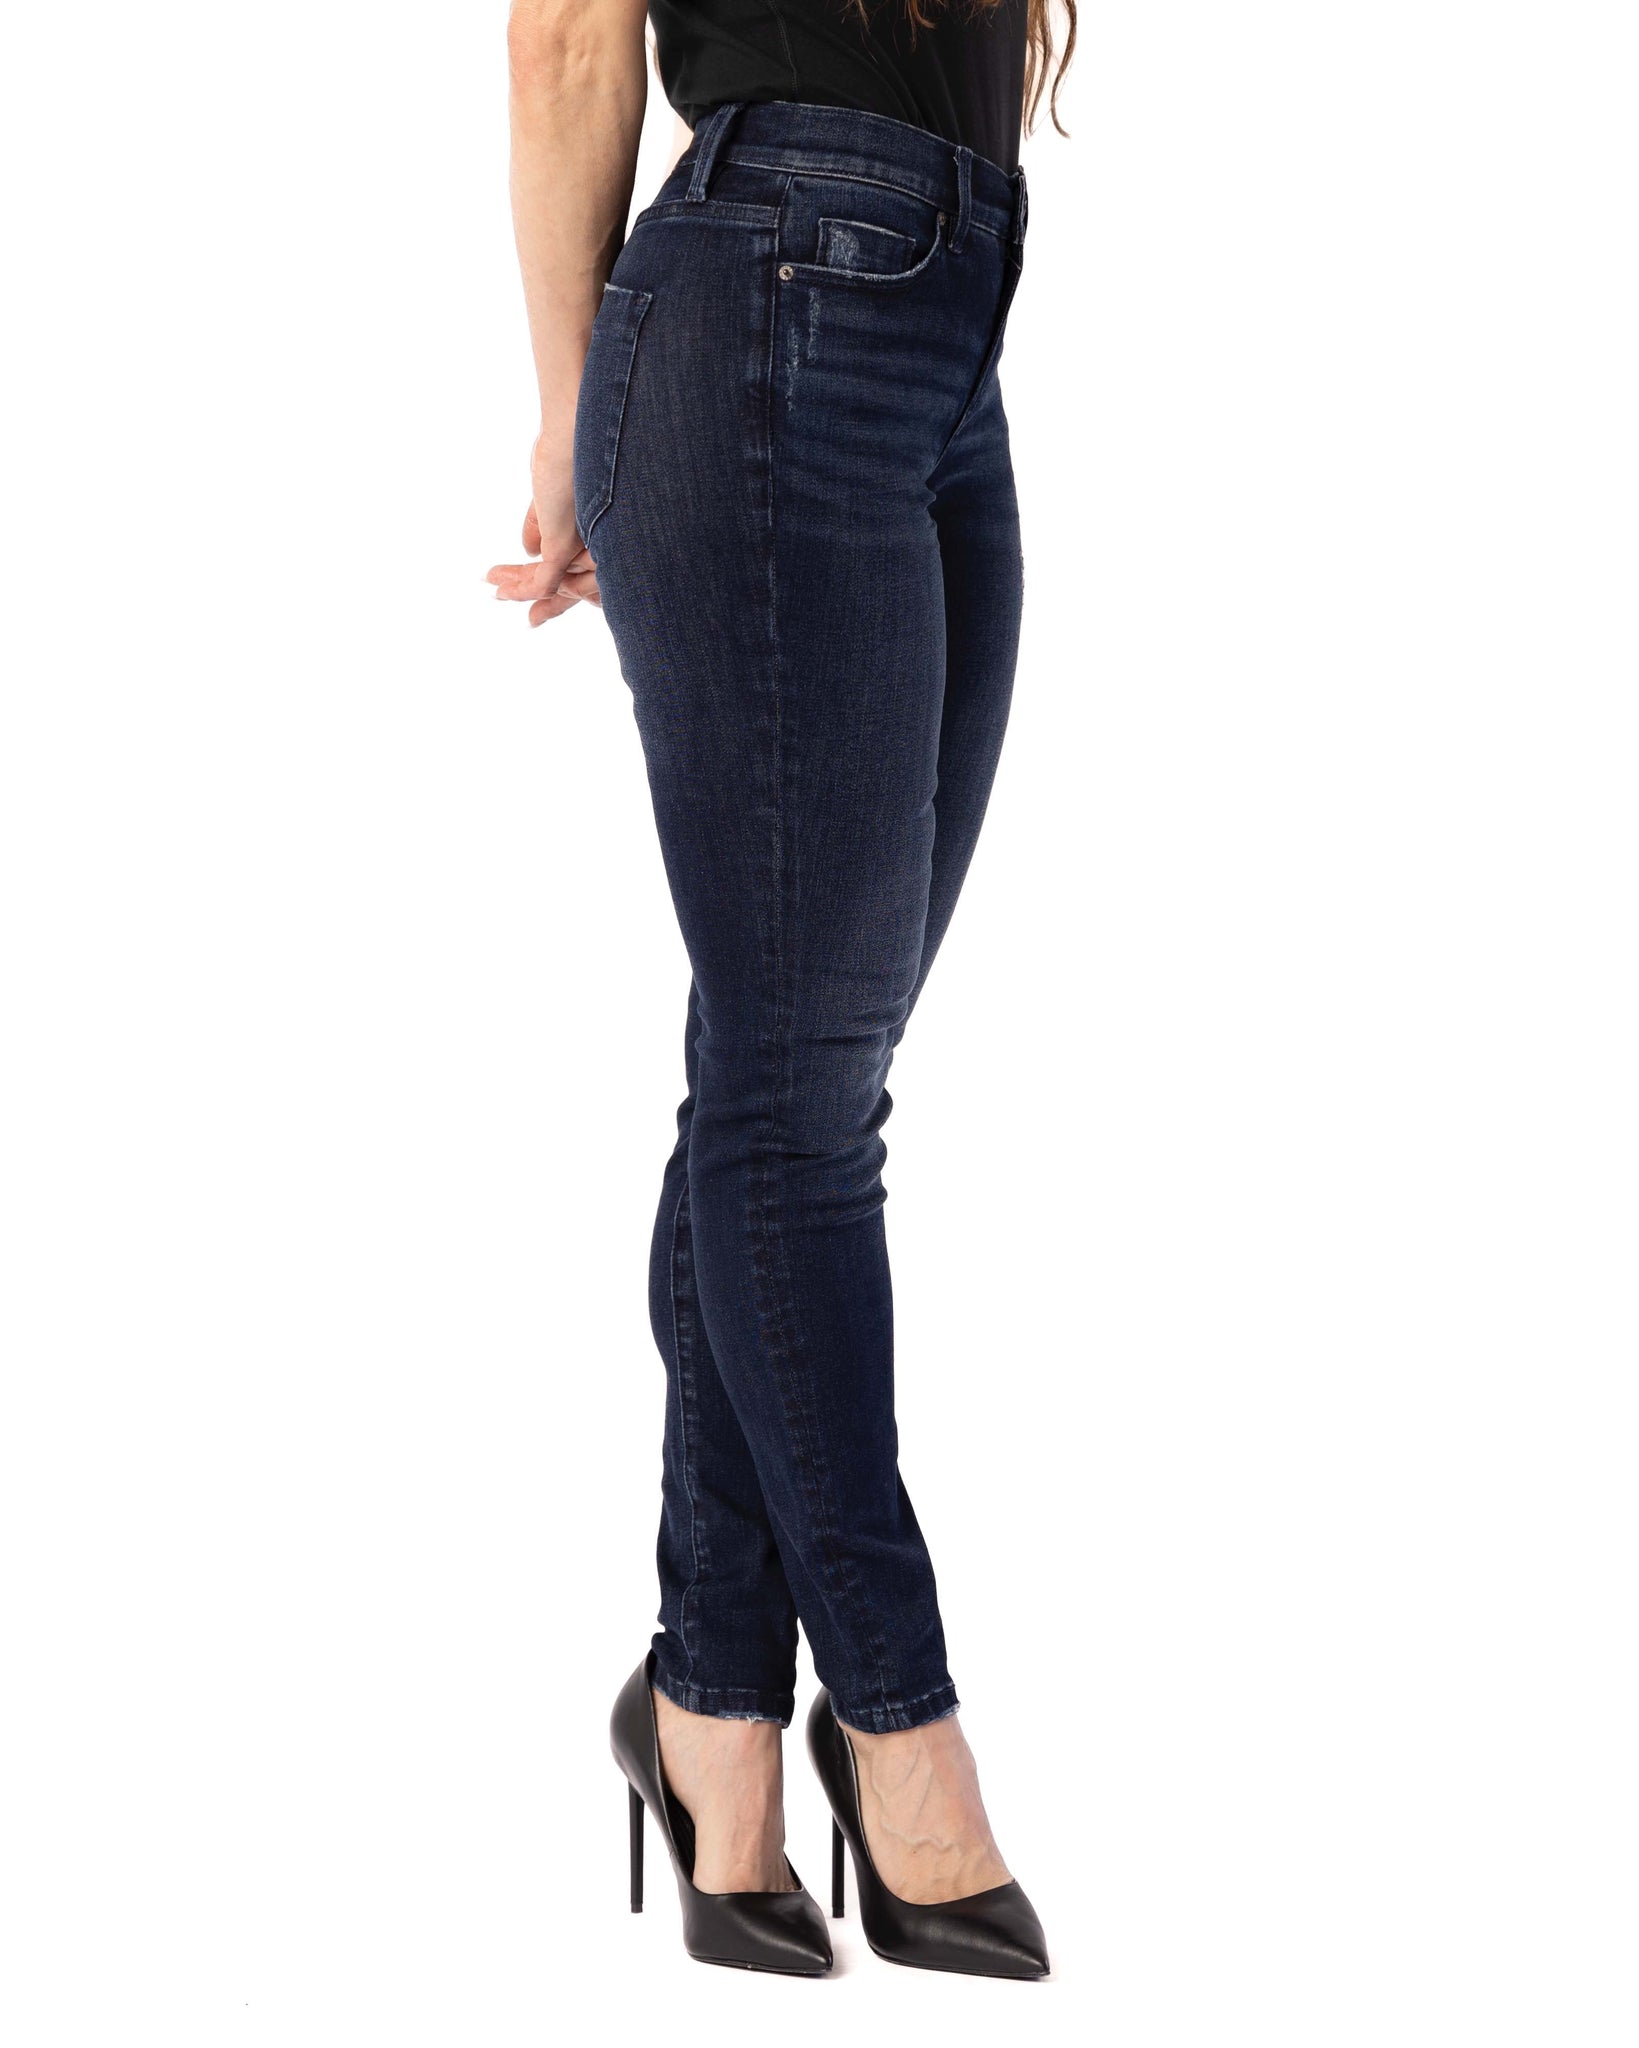 Jean, Stretchy Denim, Mid Rise Jeans – Nancy Rose